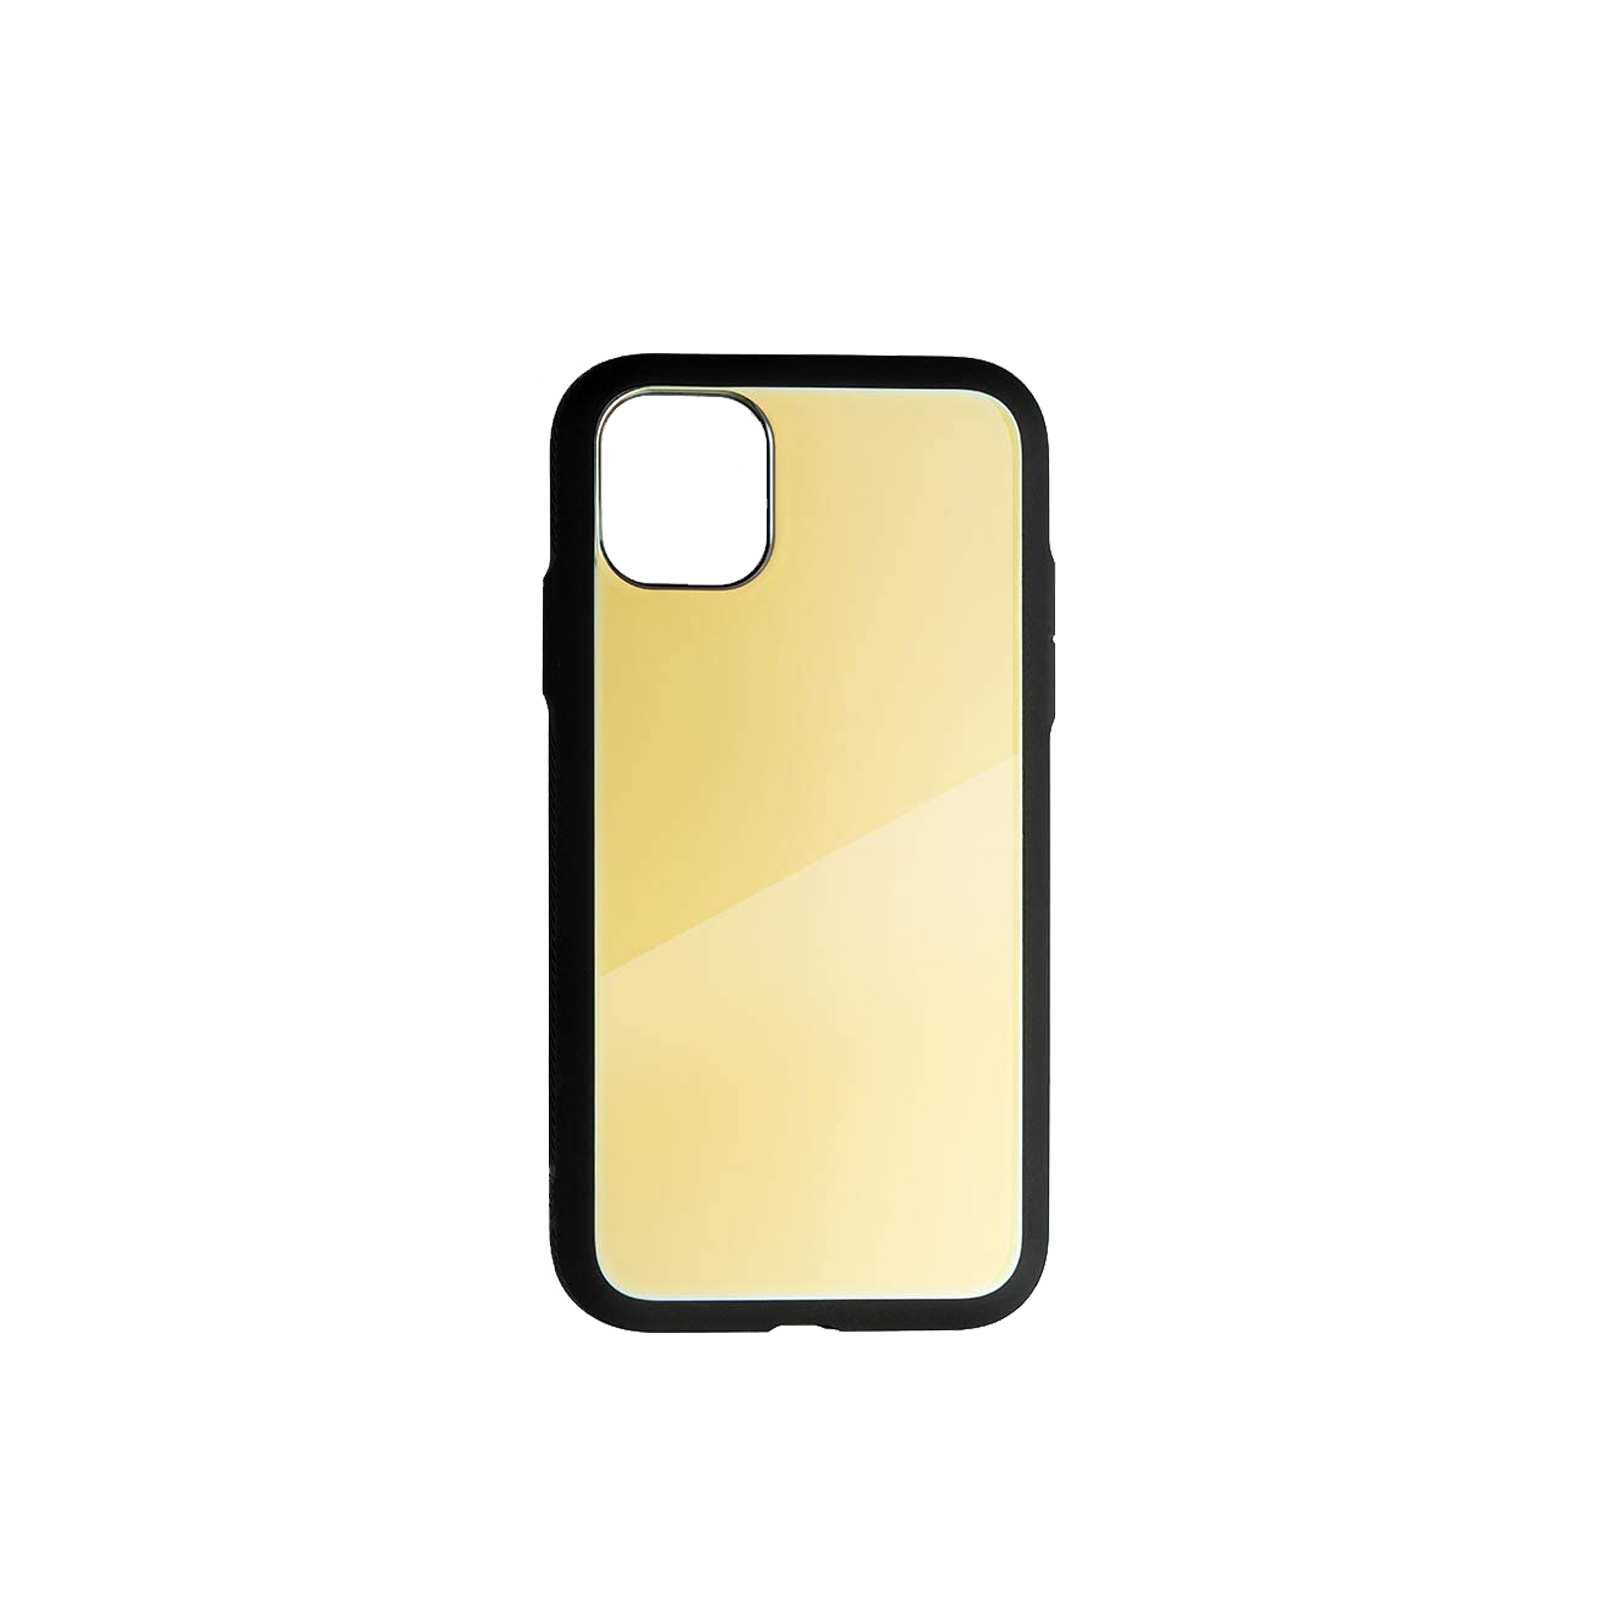 ParadigmS iPhone 11 Pro Max Case [Black / Gold]